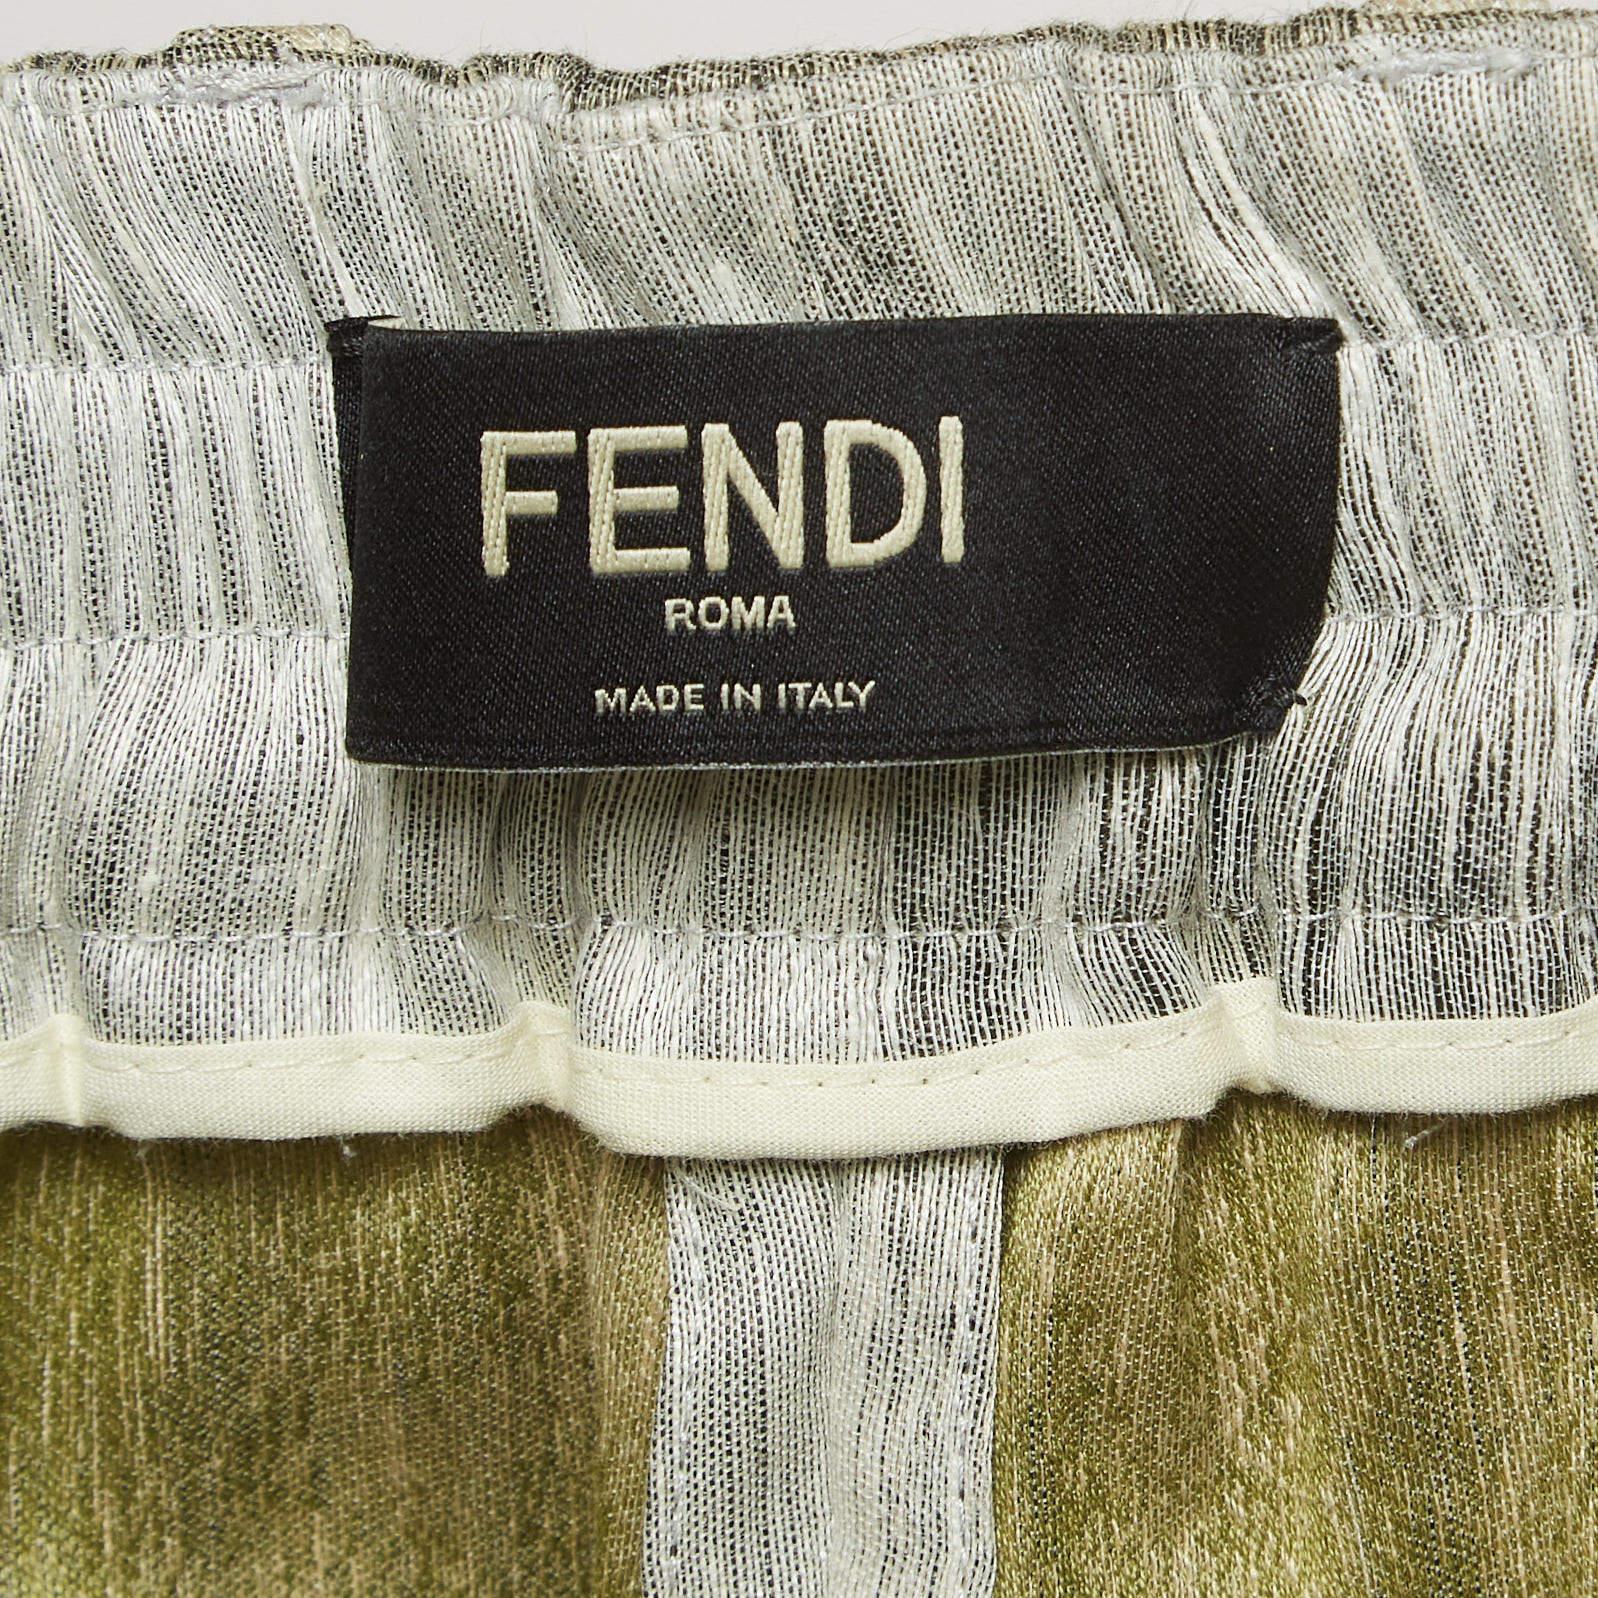 Fendi Multicolor Abstract Print Linen Blend Cargo Shorts M In Good Condition For Sale In Dubai, Al Qouz 2